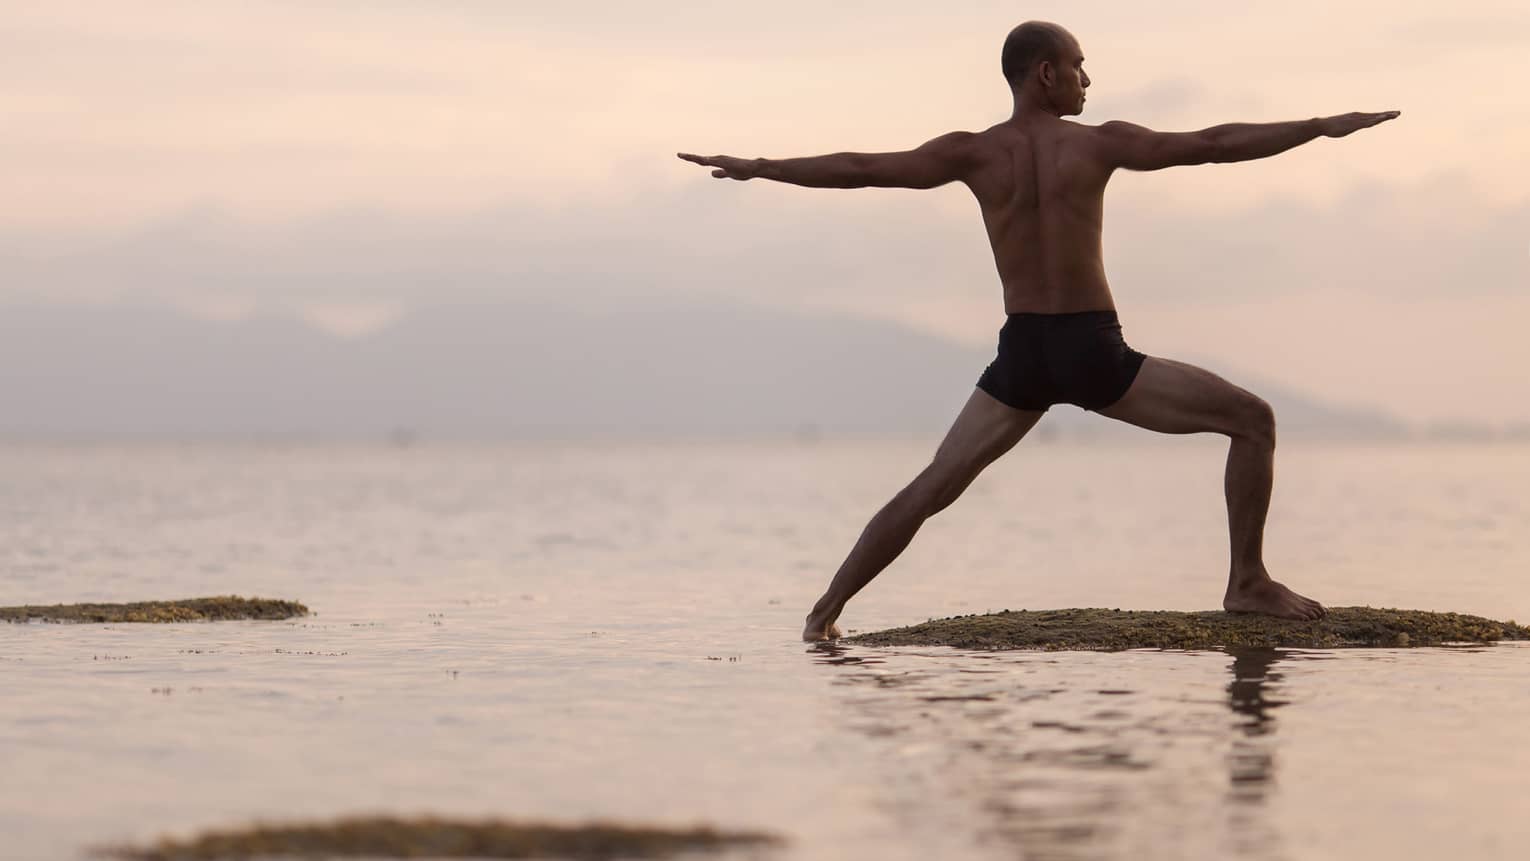 Silhouette of man in swimsuit doing yoga pose on sandbar in ocean at sunset 